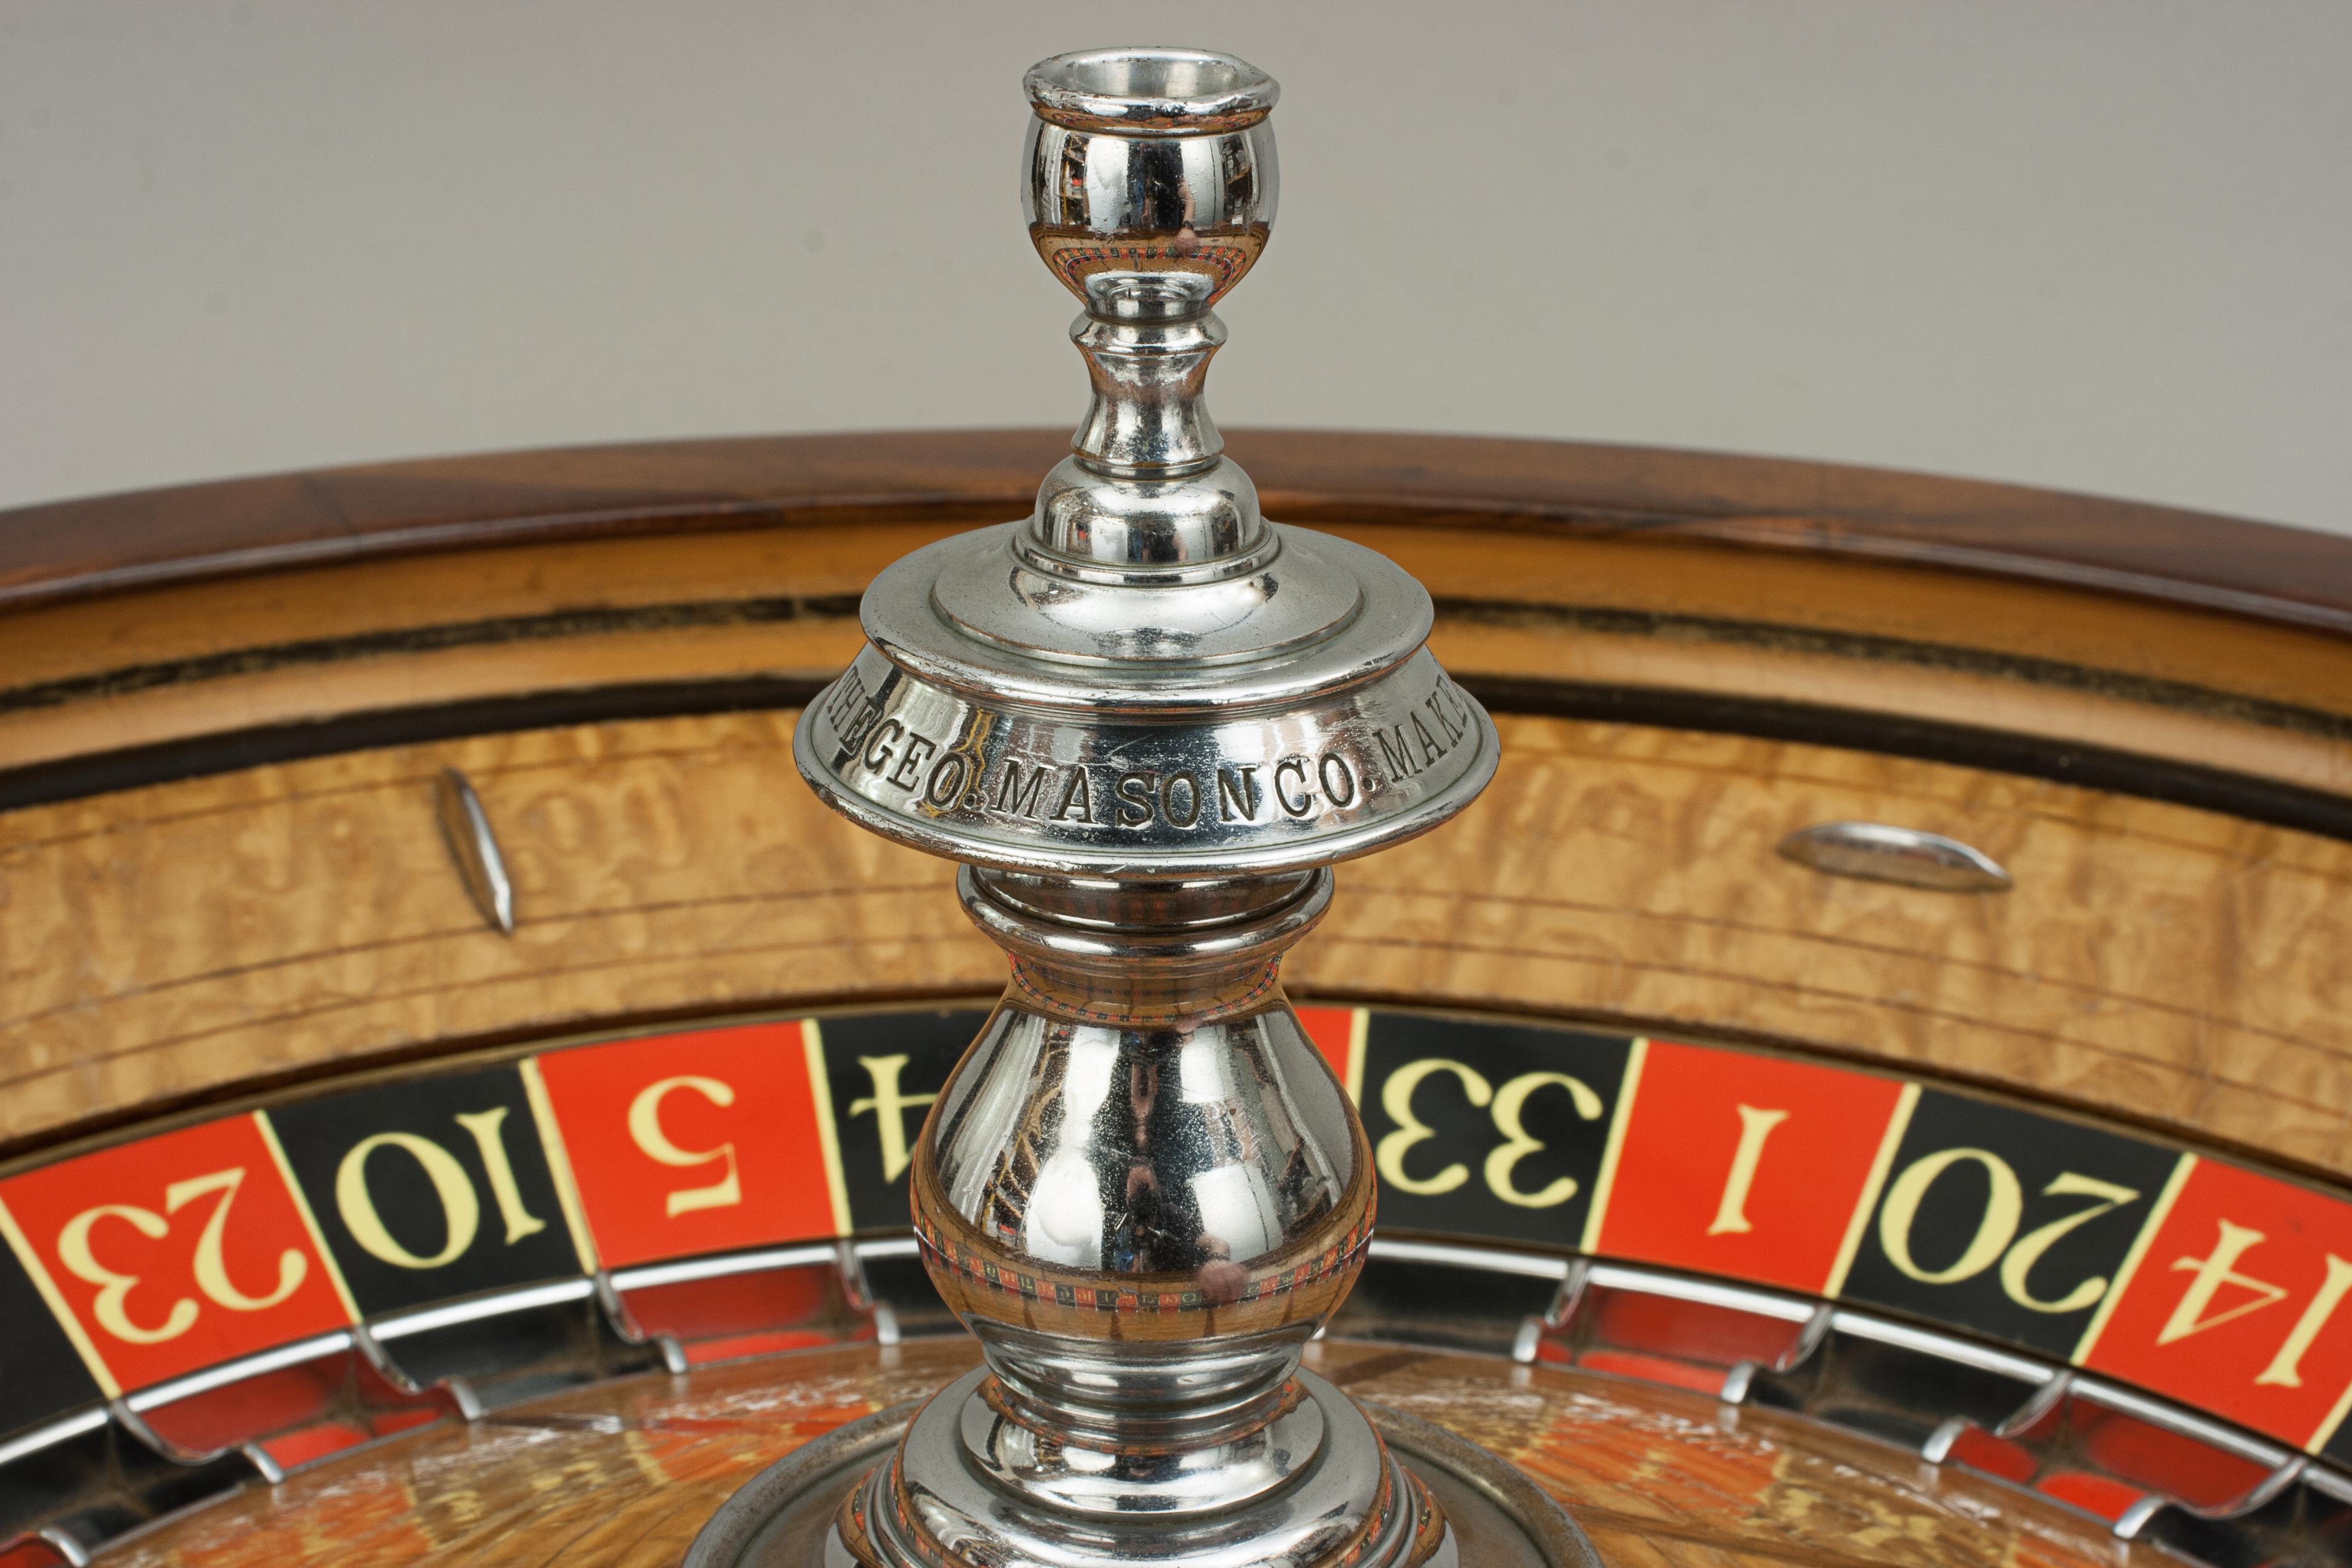 Antique Casino Roulette Wheel, George Mason Co. Denver Colorado 10